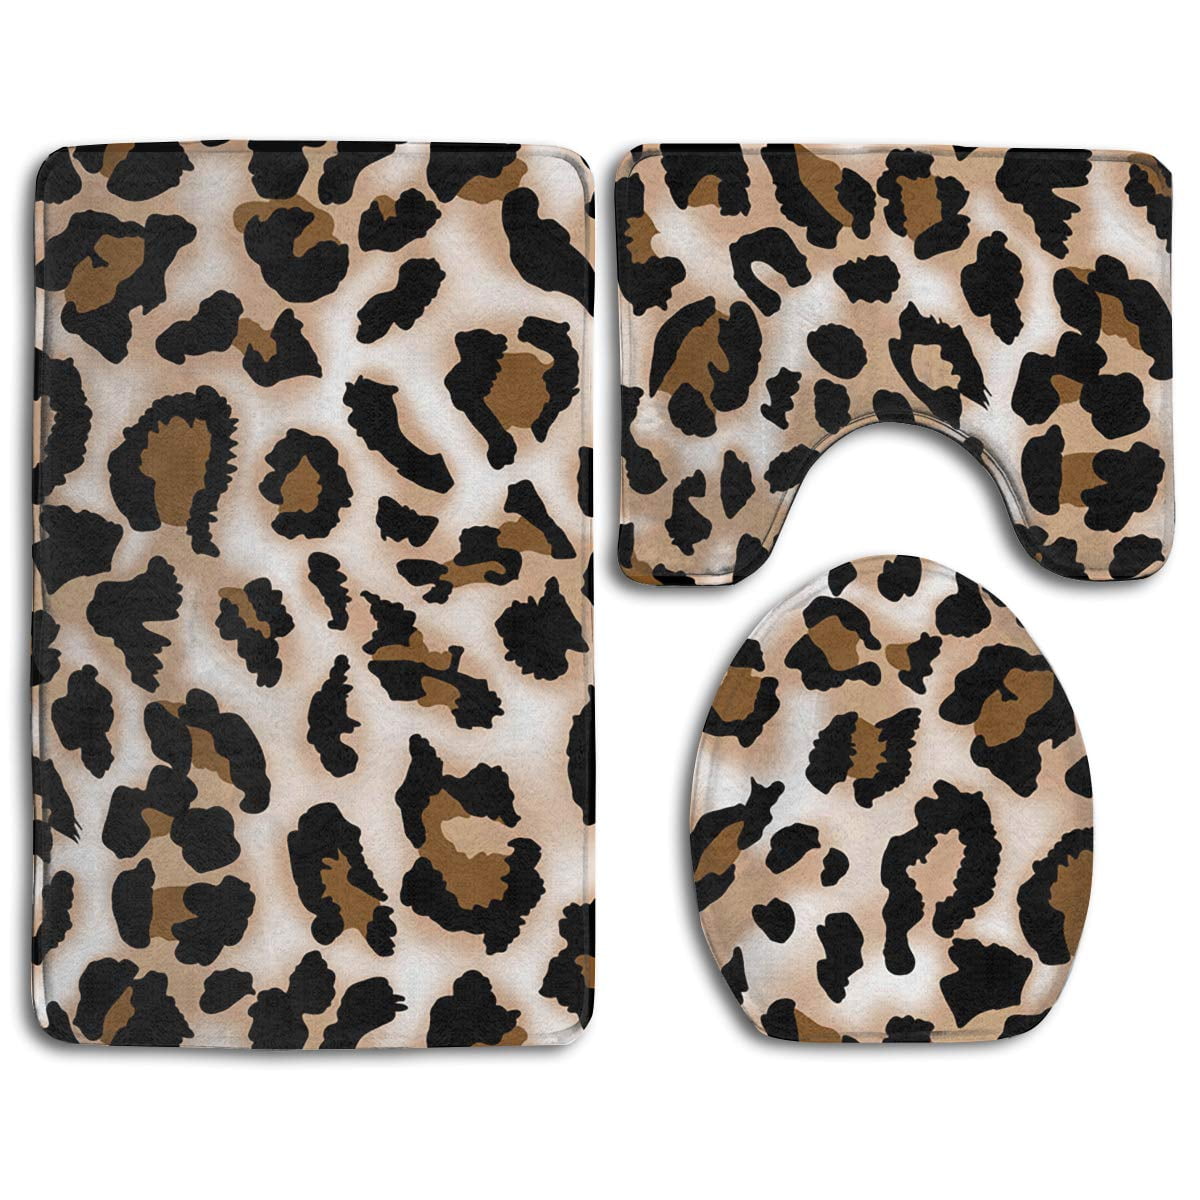 GOHAO Leopard Prints Printed 3 Piece Bathroom Rugs Set